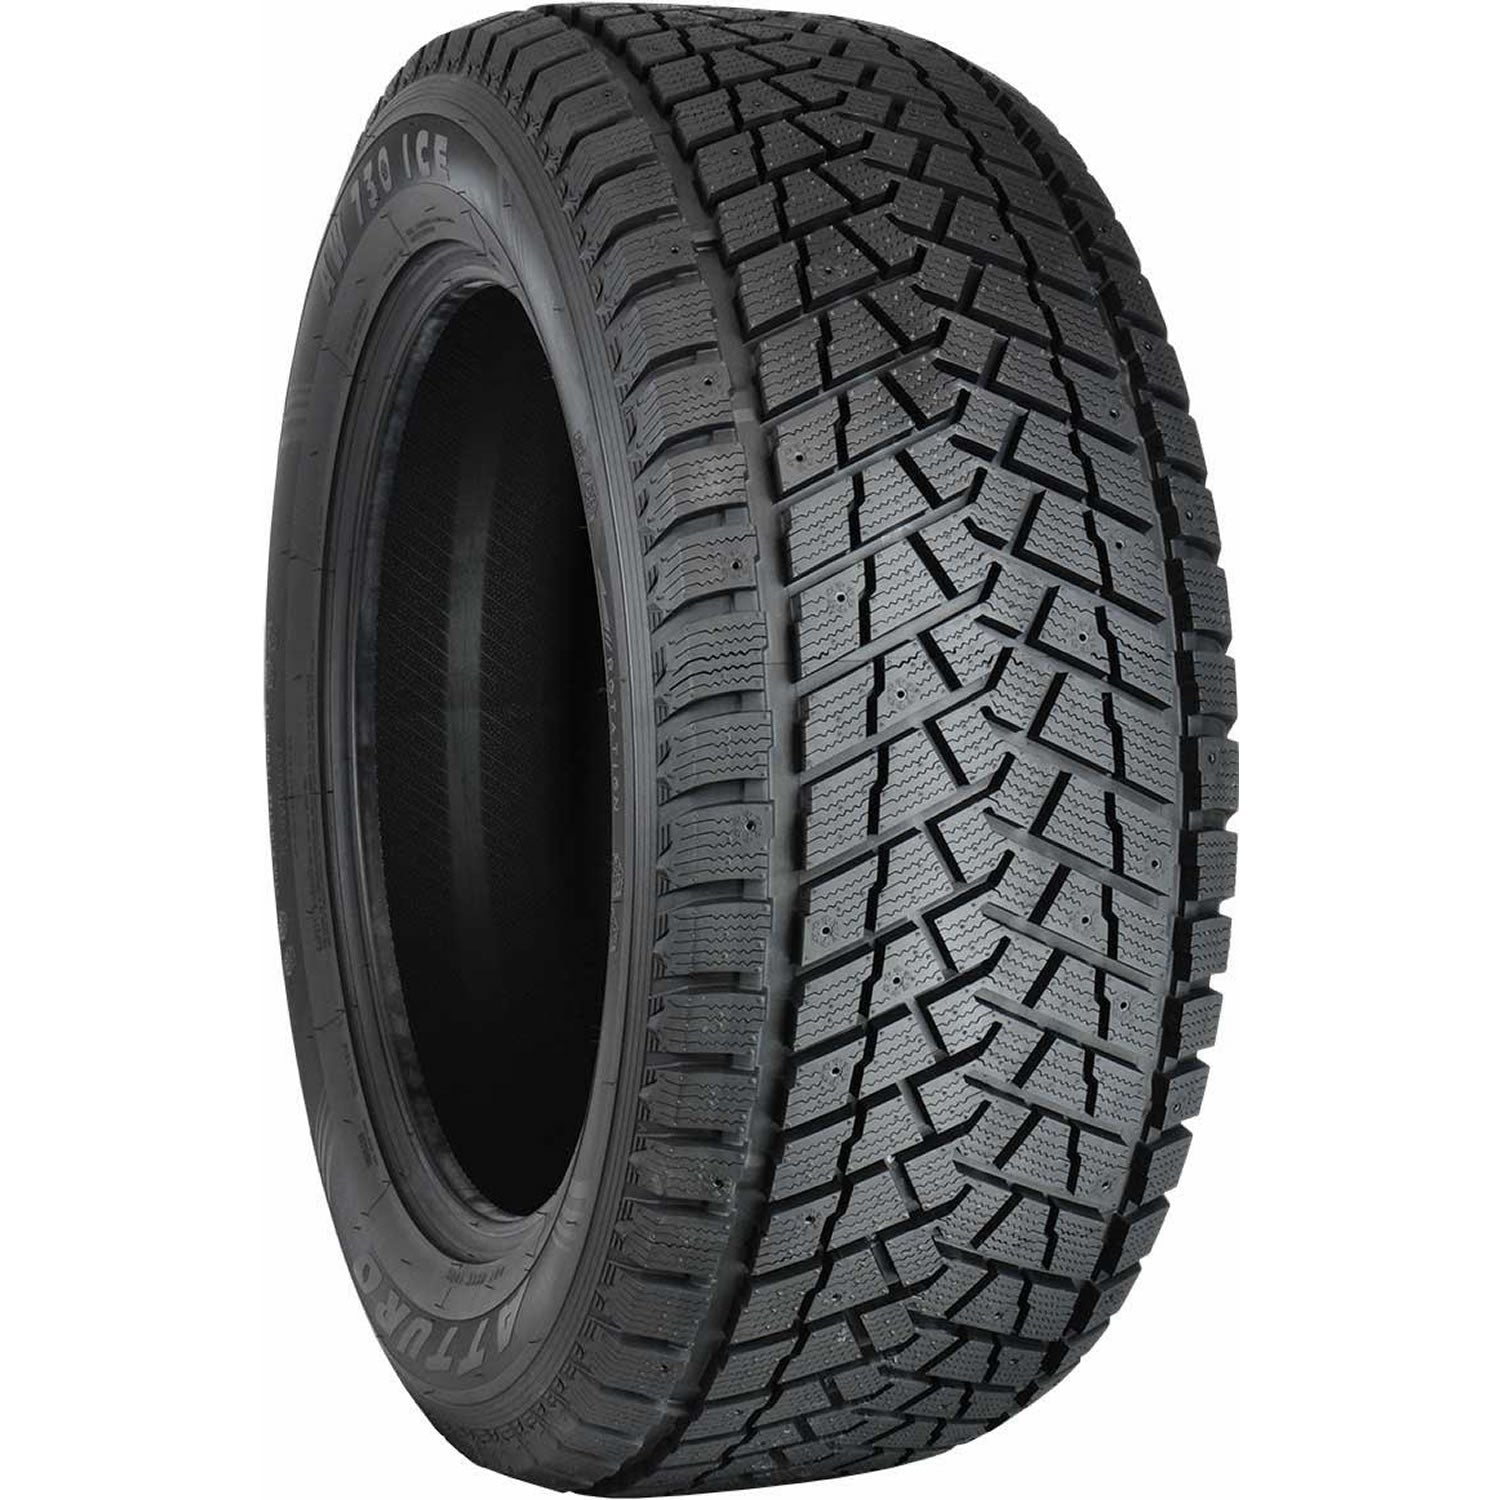 ATTURO AW730 ICE 265/50R19 (29.6X10.8R 19) Tires